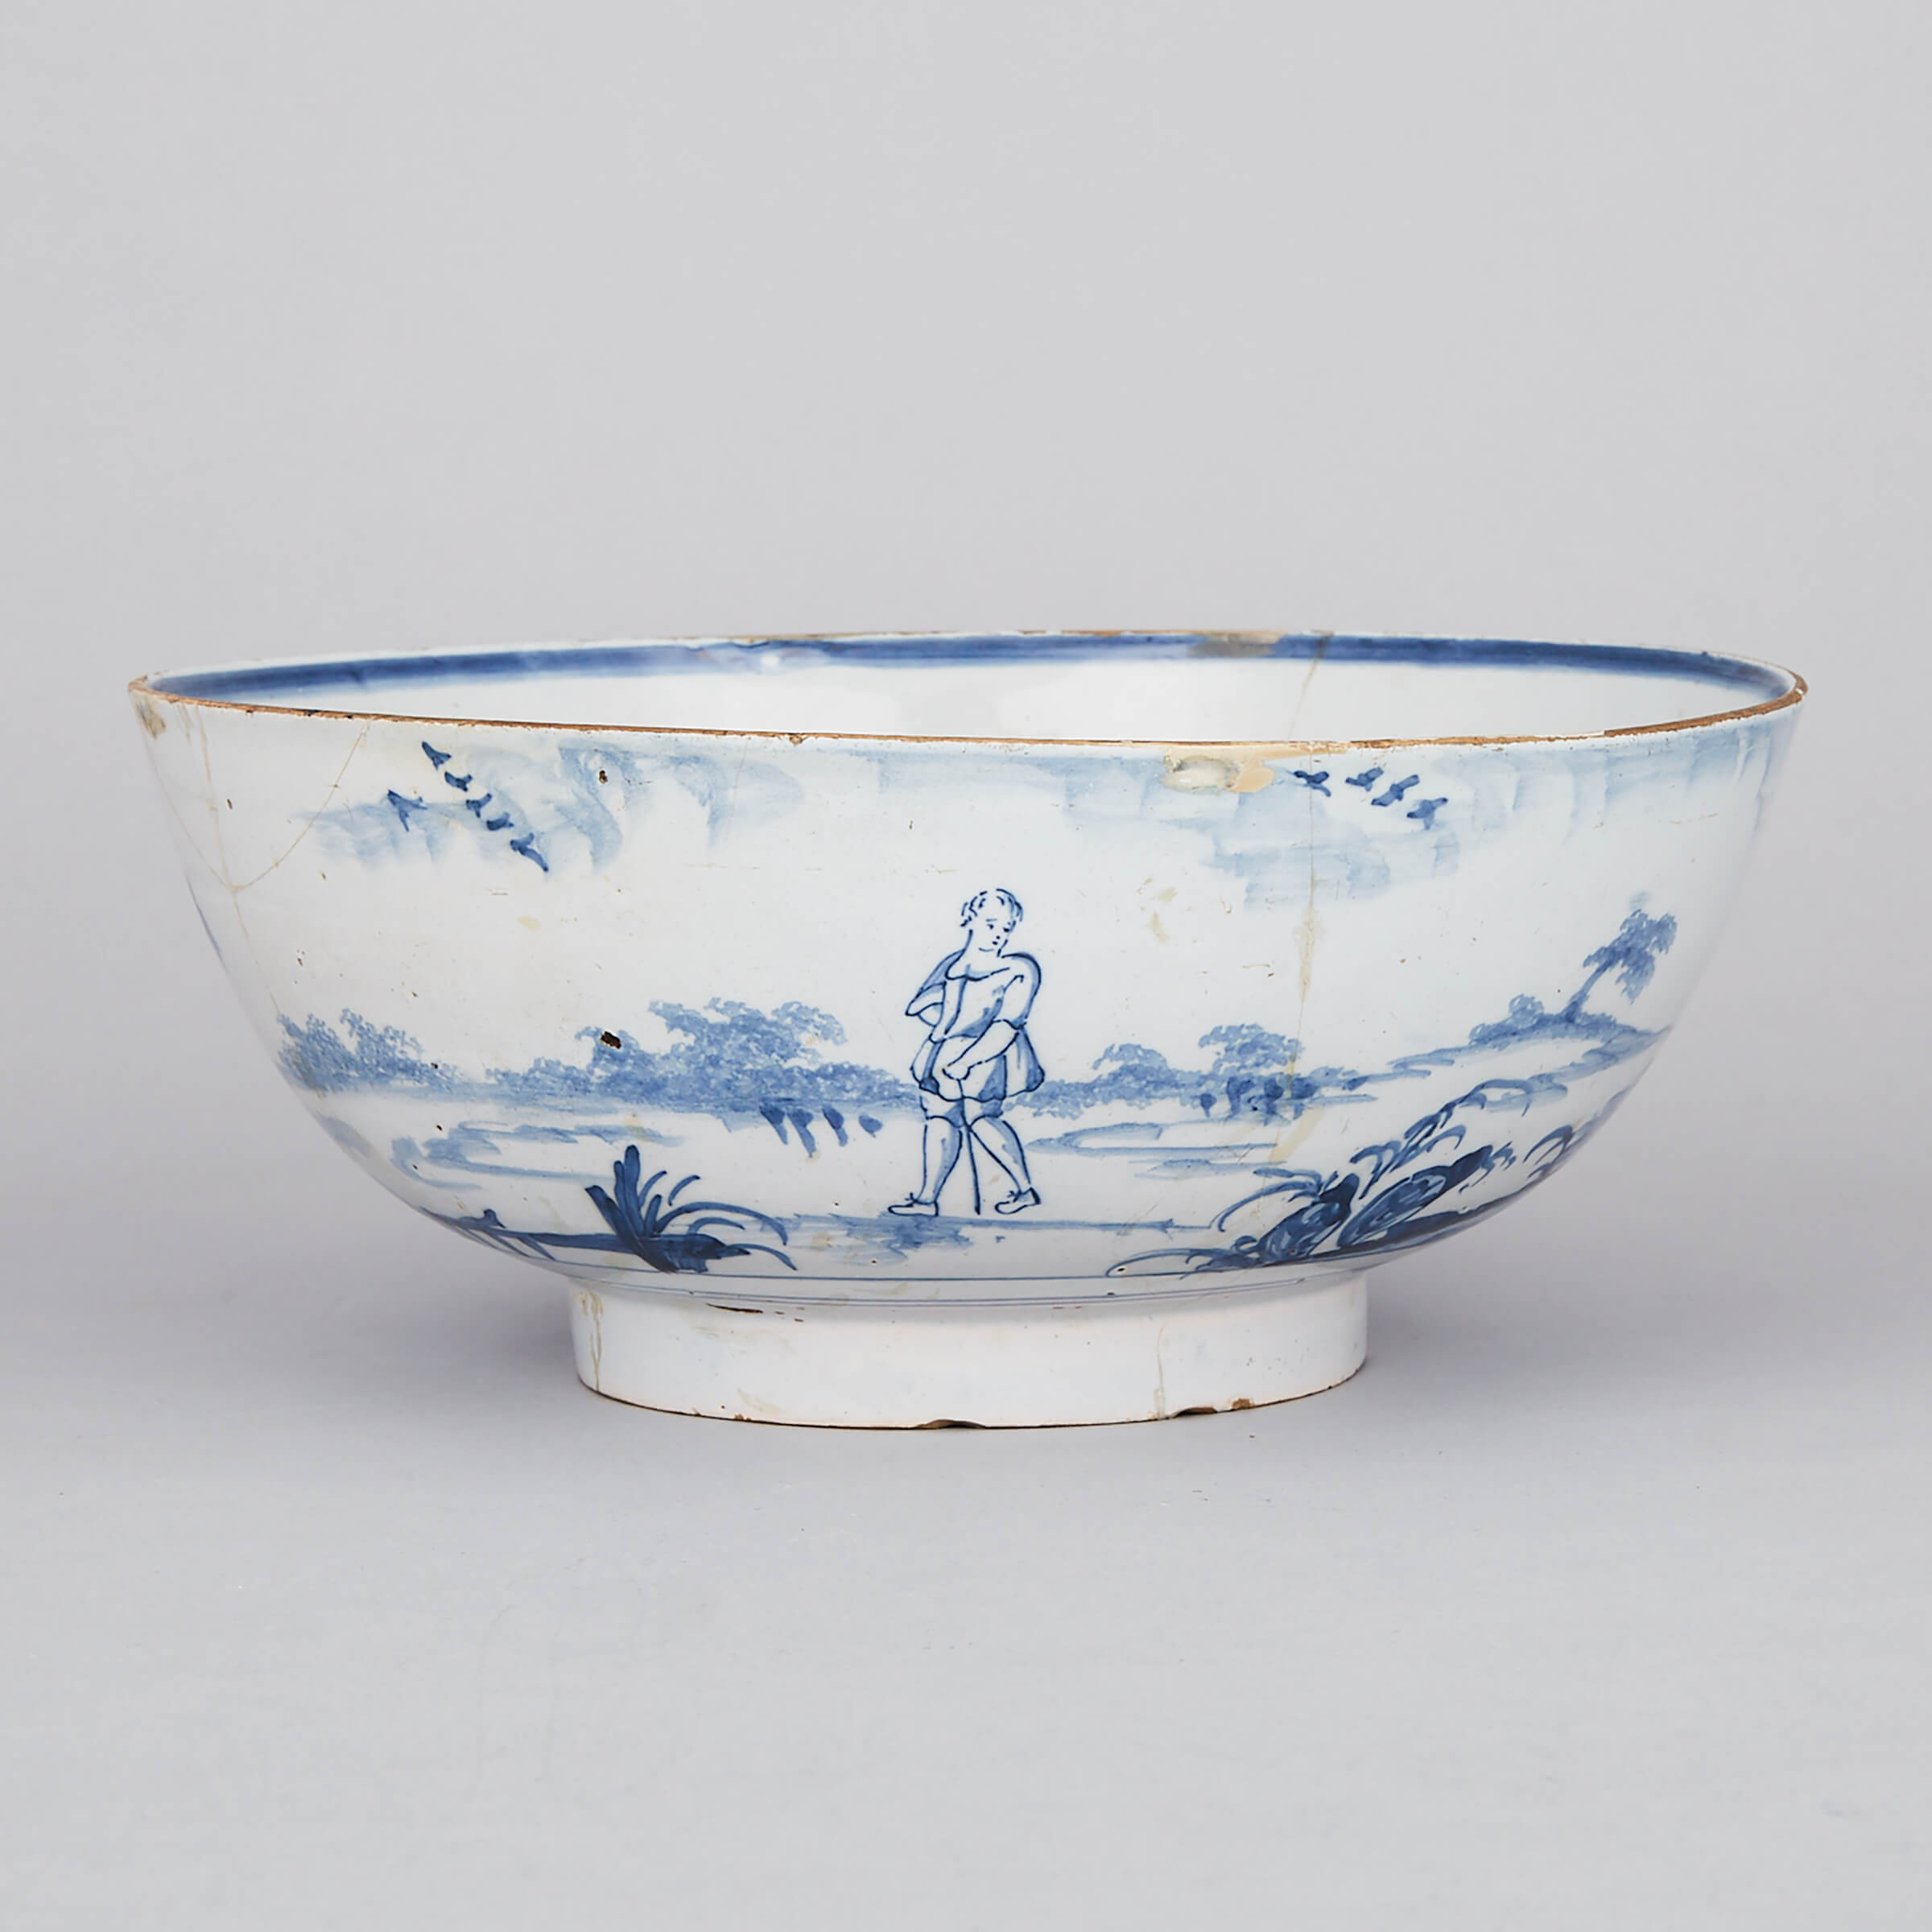 Delft Blue and White Bowl, 18th century